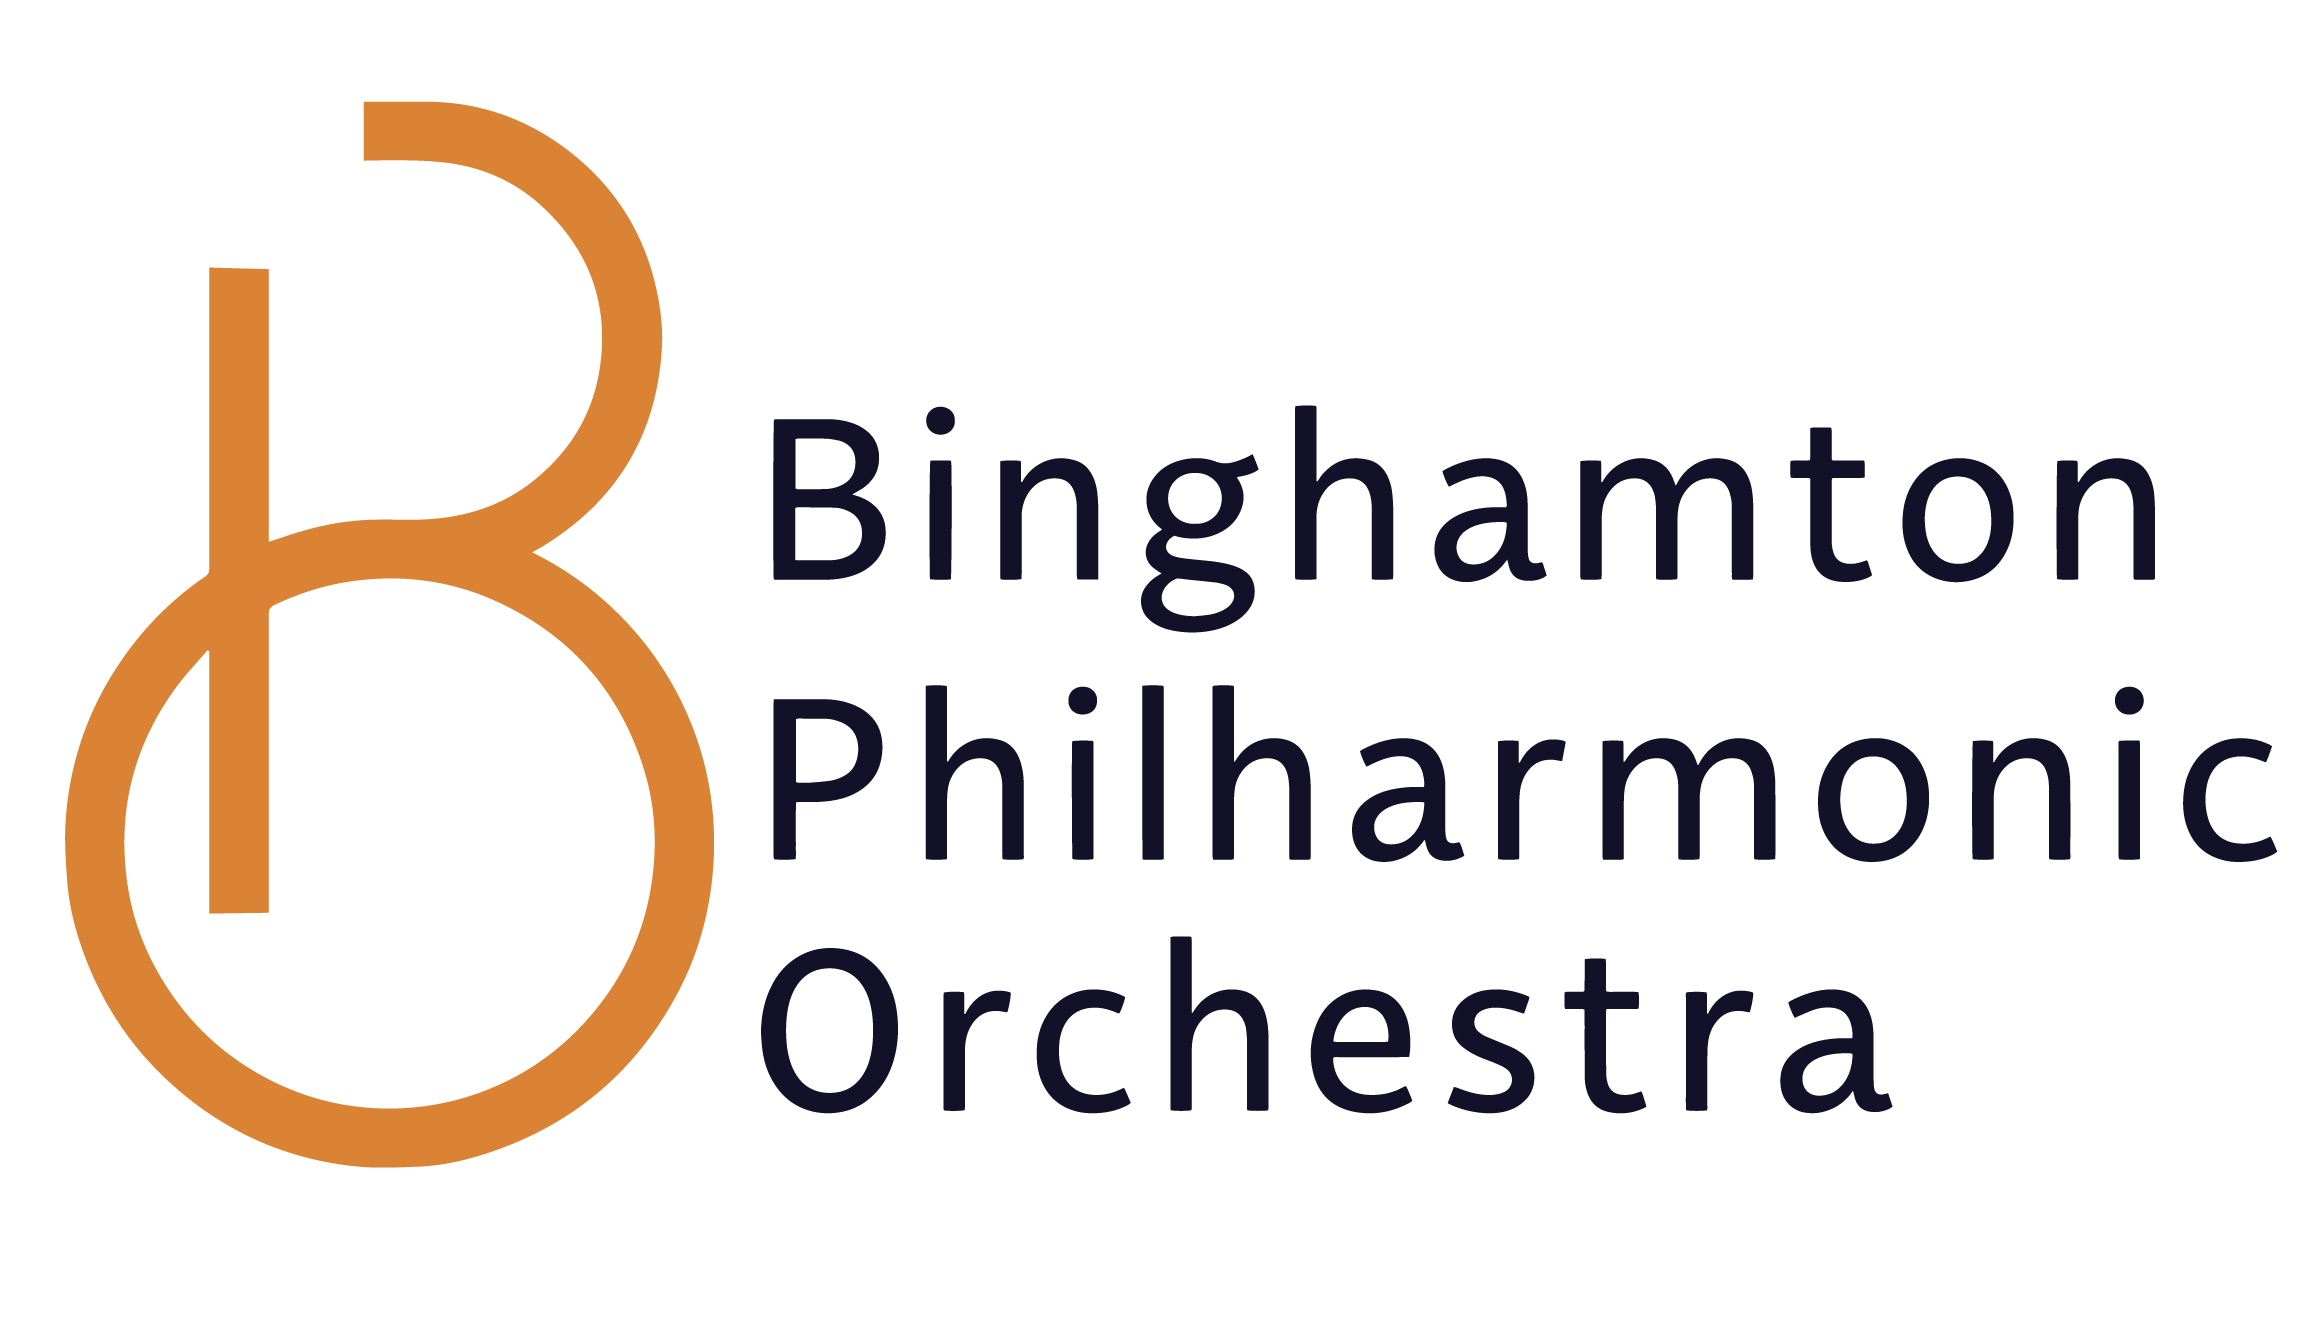 Binghamton Philharmonic Orchestra